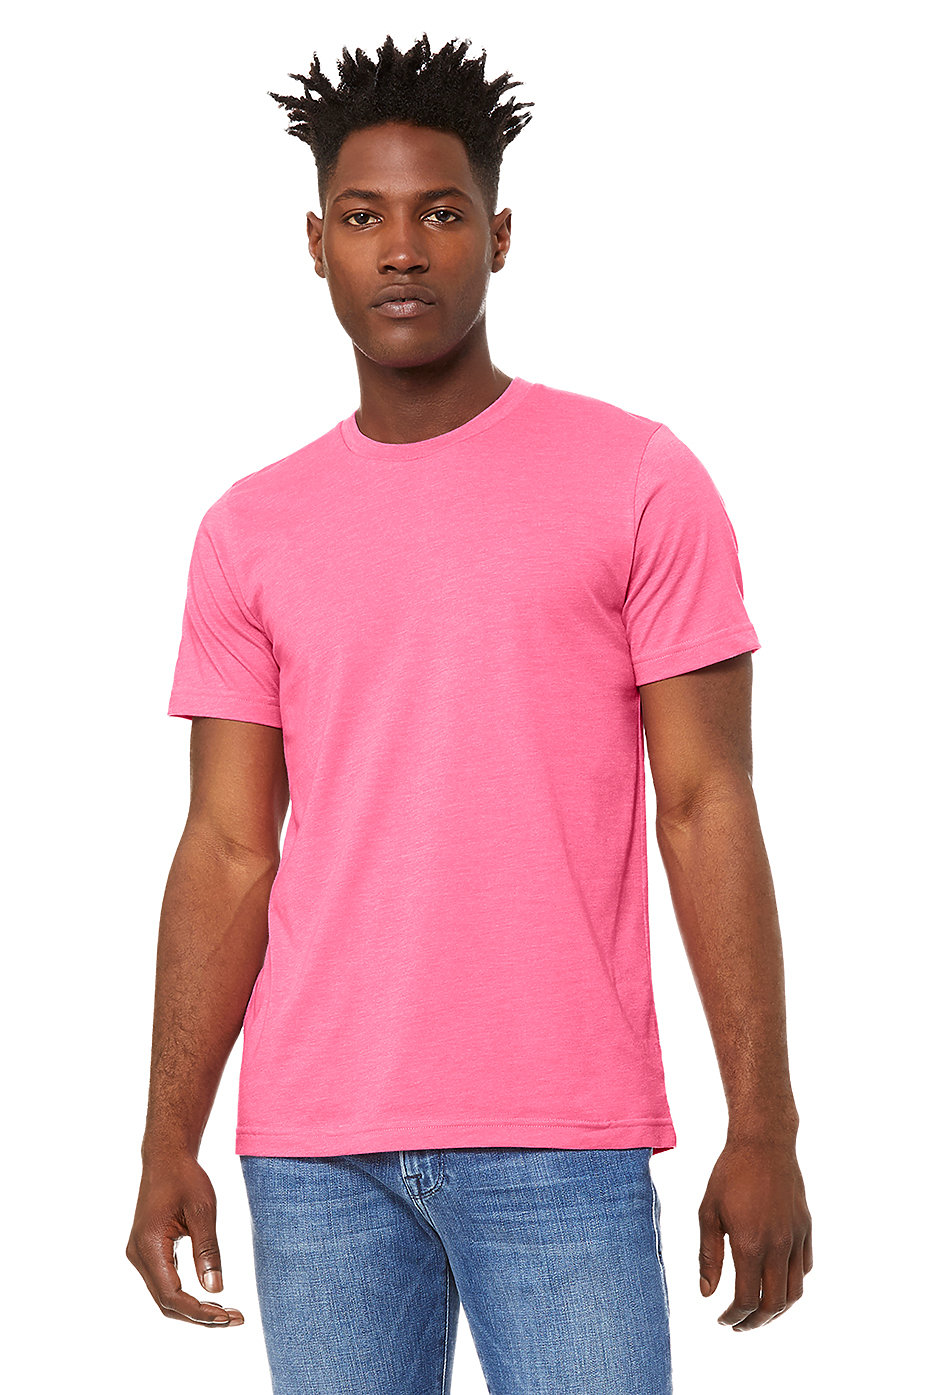 Download Heathered Shirt Mens Wholesale Clothing Heather T Shirts Blank T Shirts Bella Canvas